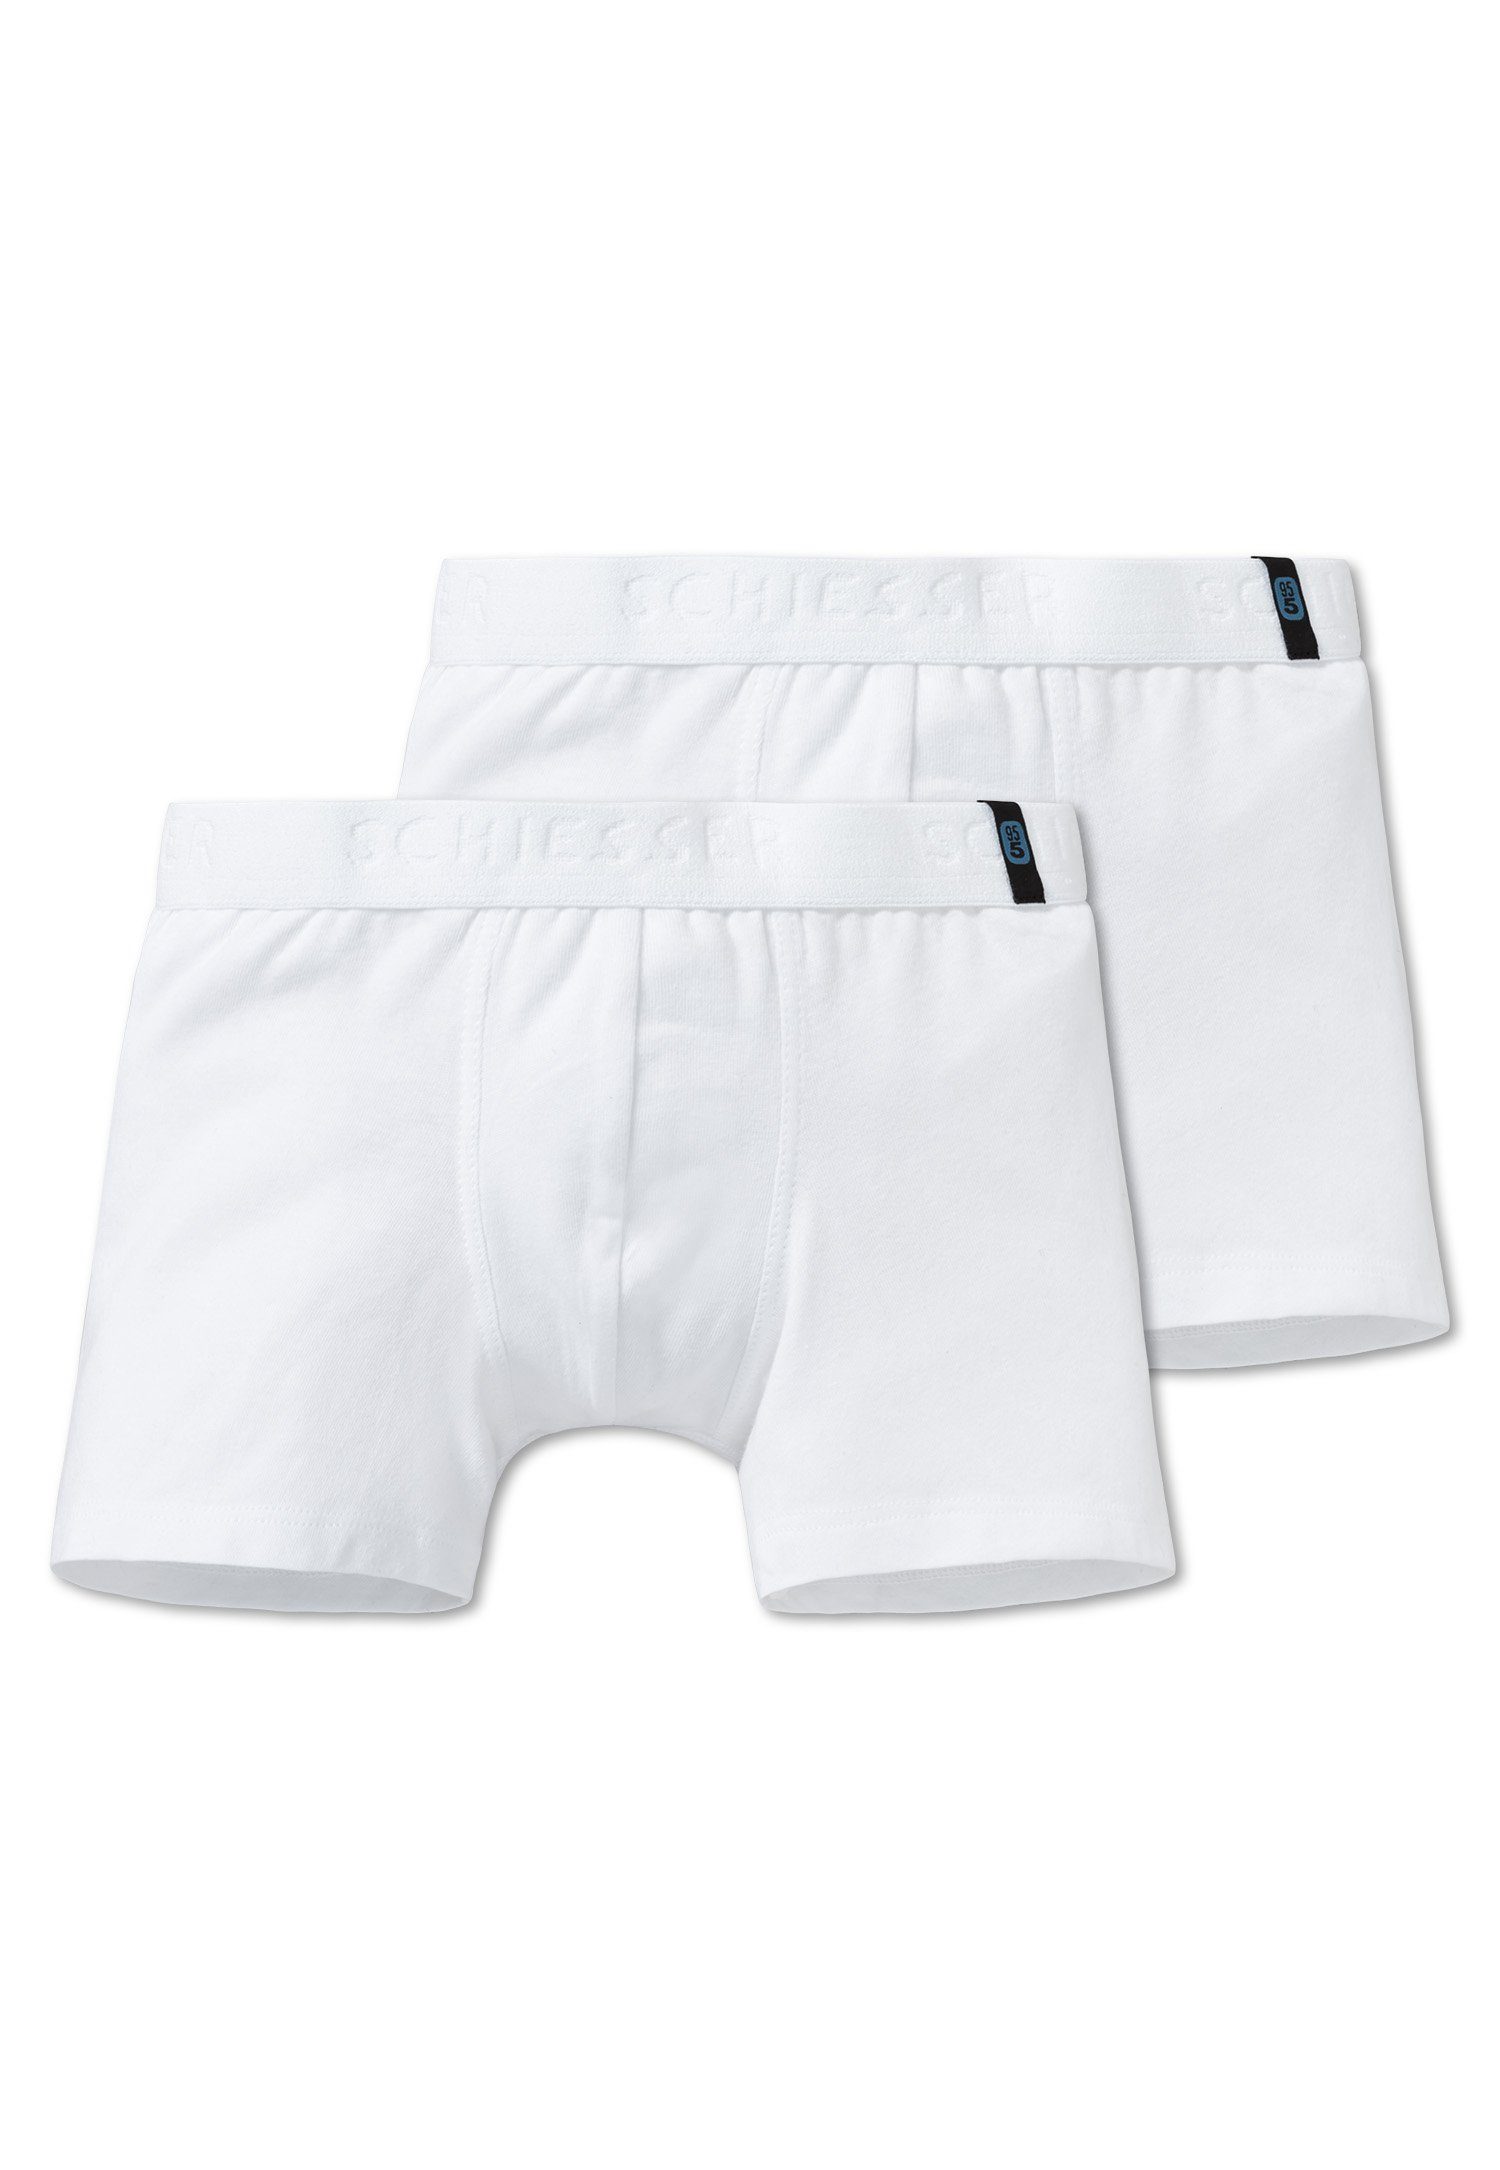 Schiesser Boxershorts Cotton 95/5 (Set, 2-St., Set) 2er Set Unterhosen, Jungen Hip-Shorts Pants, Unterhosen, Cotton 95/5 weiss